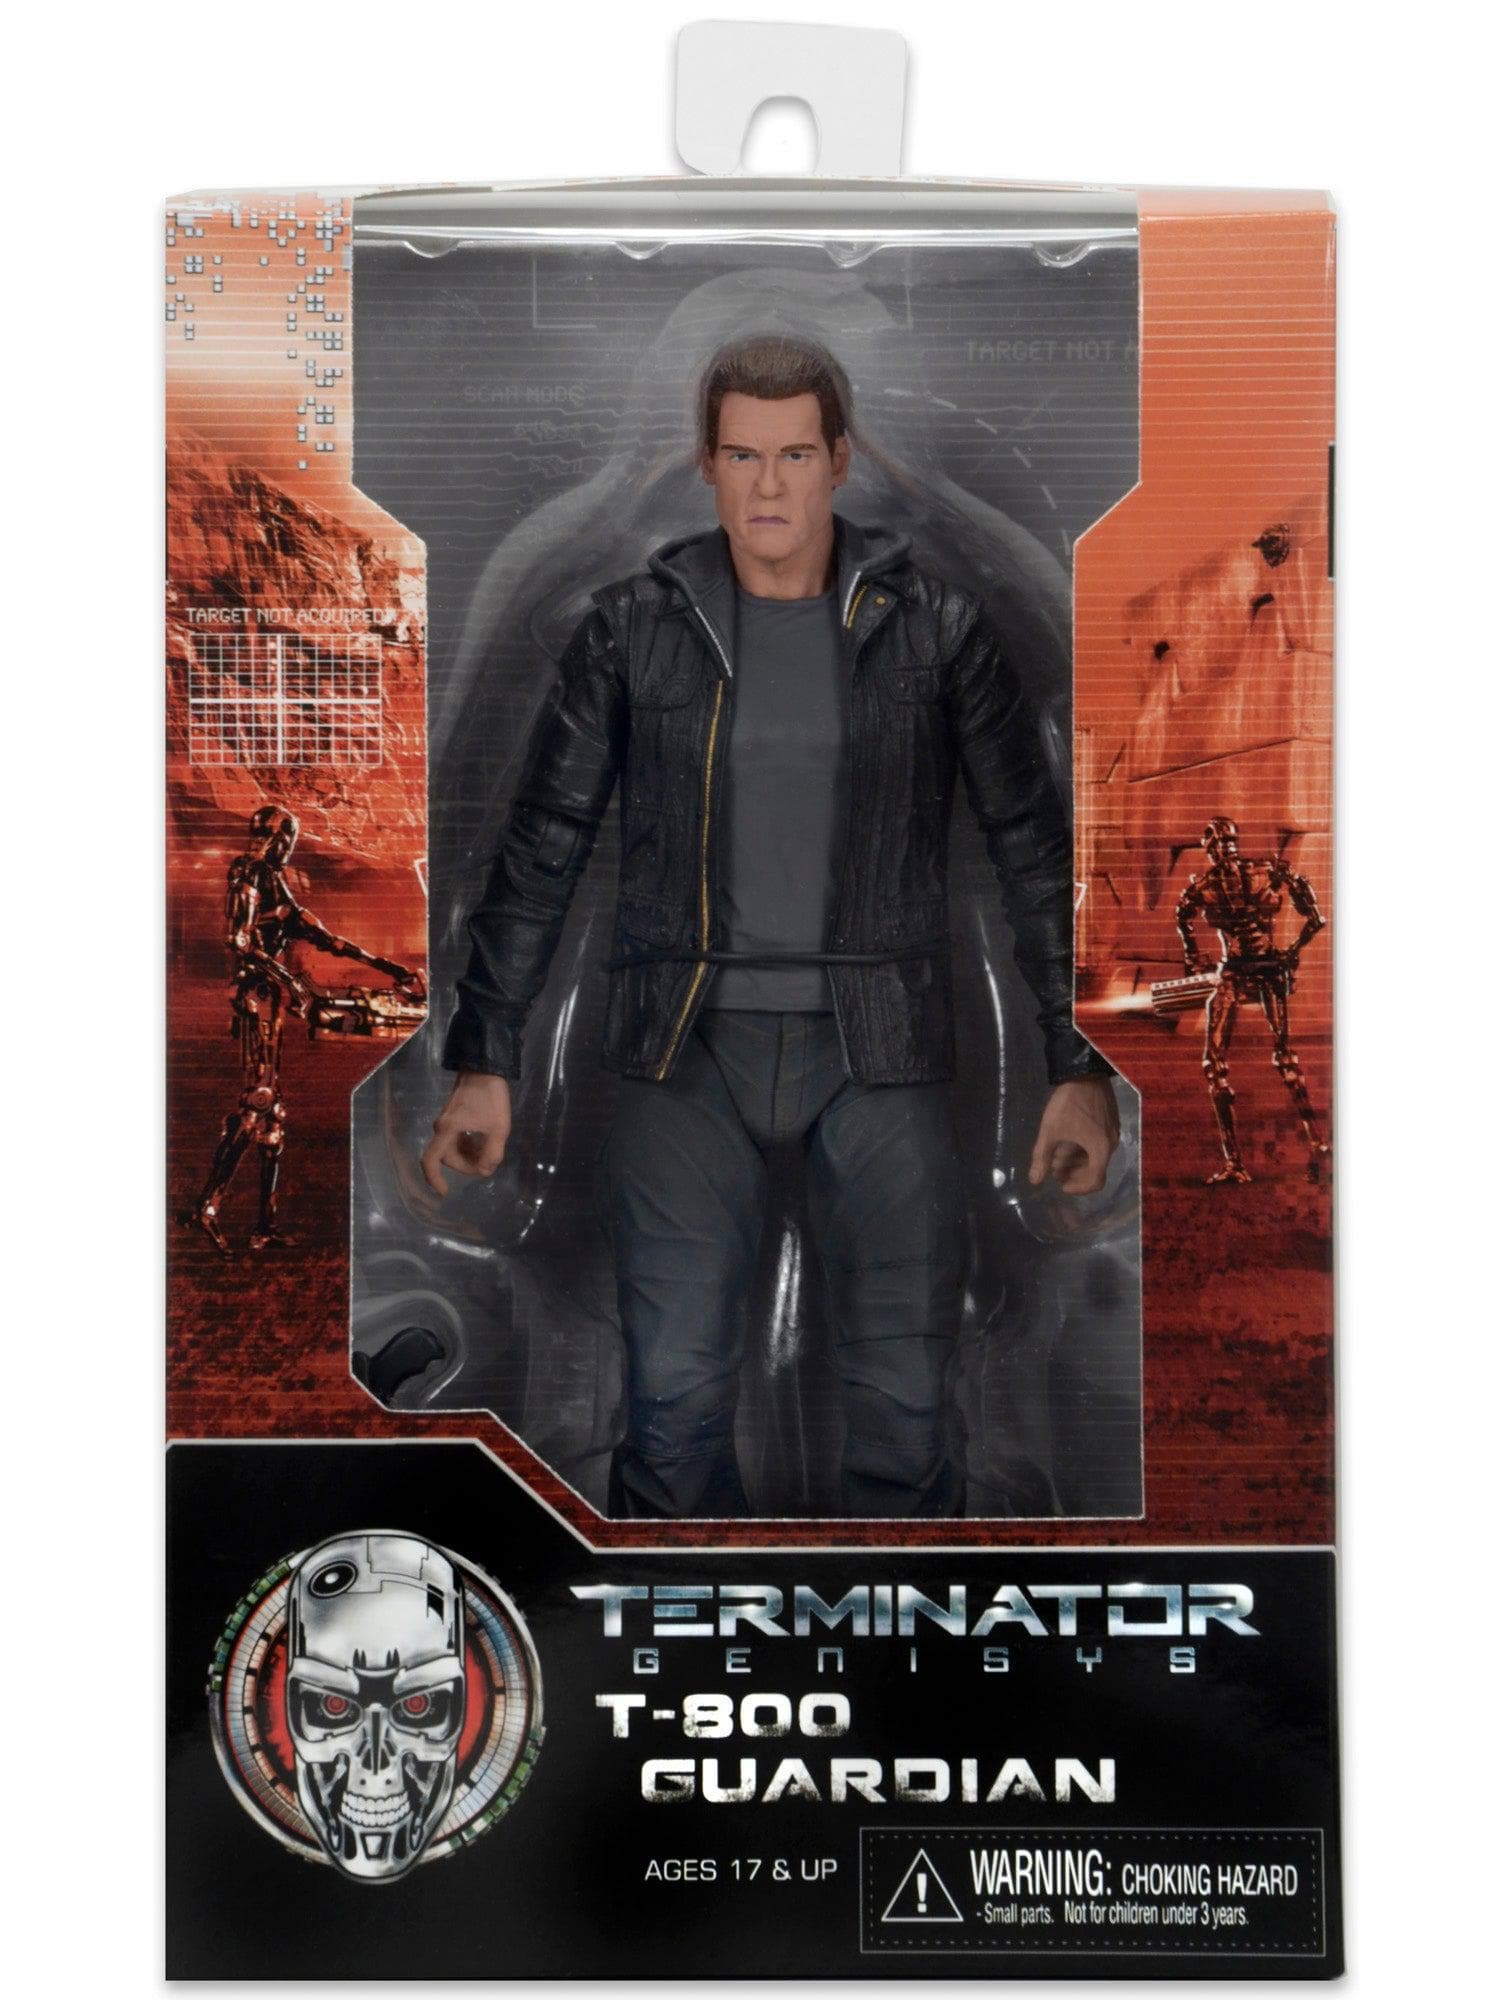 NECA - Terminator Genisys - 7" Scale Action Figure - Series 1 Guard - costumes.com